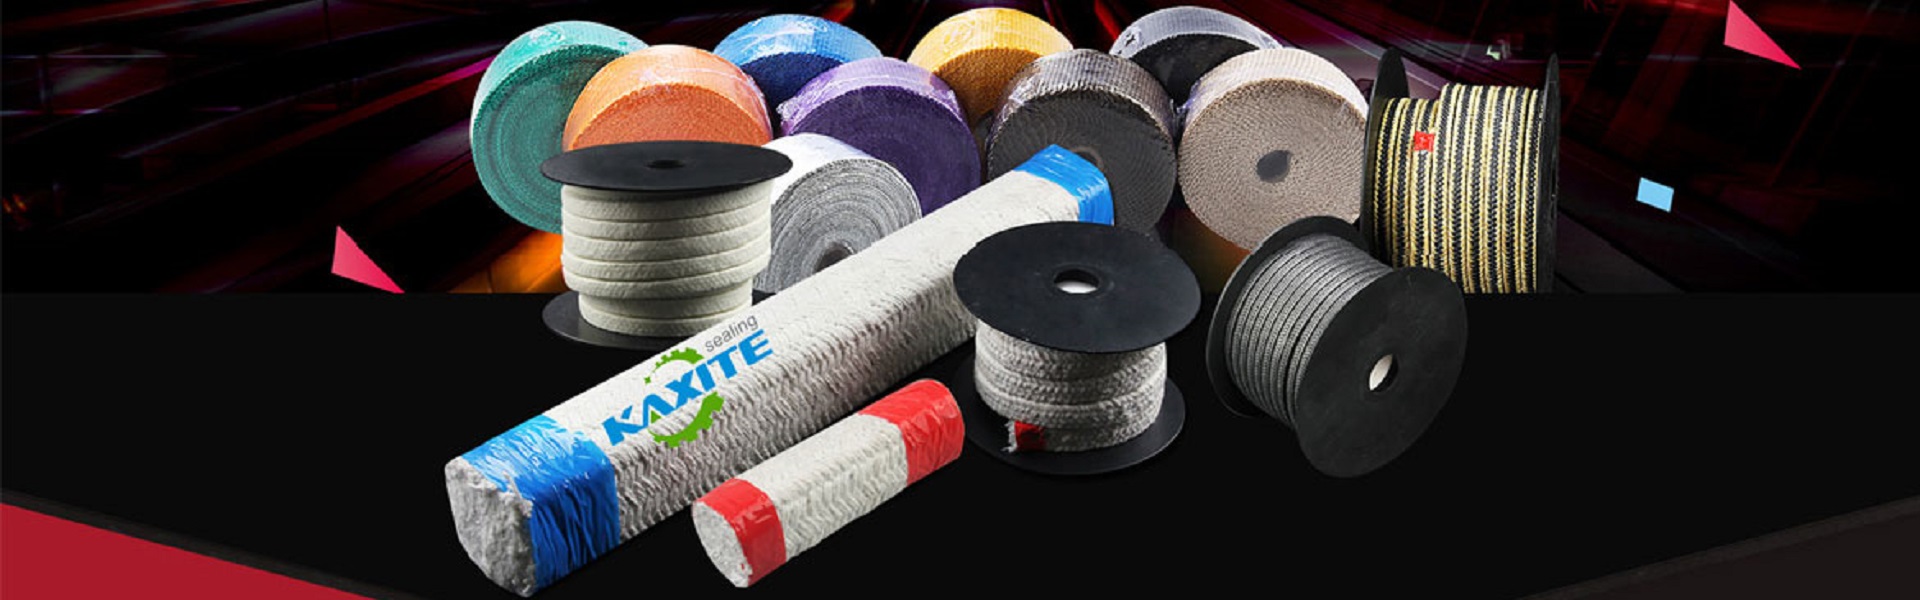 Ningbo Kaxite Sealing Materials Co., Ltd.